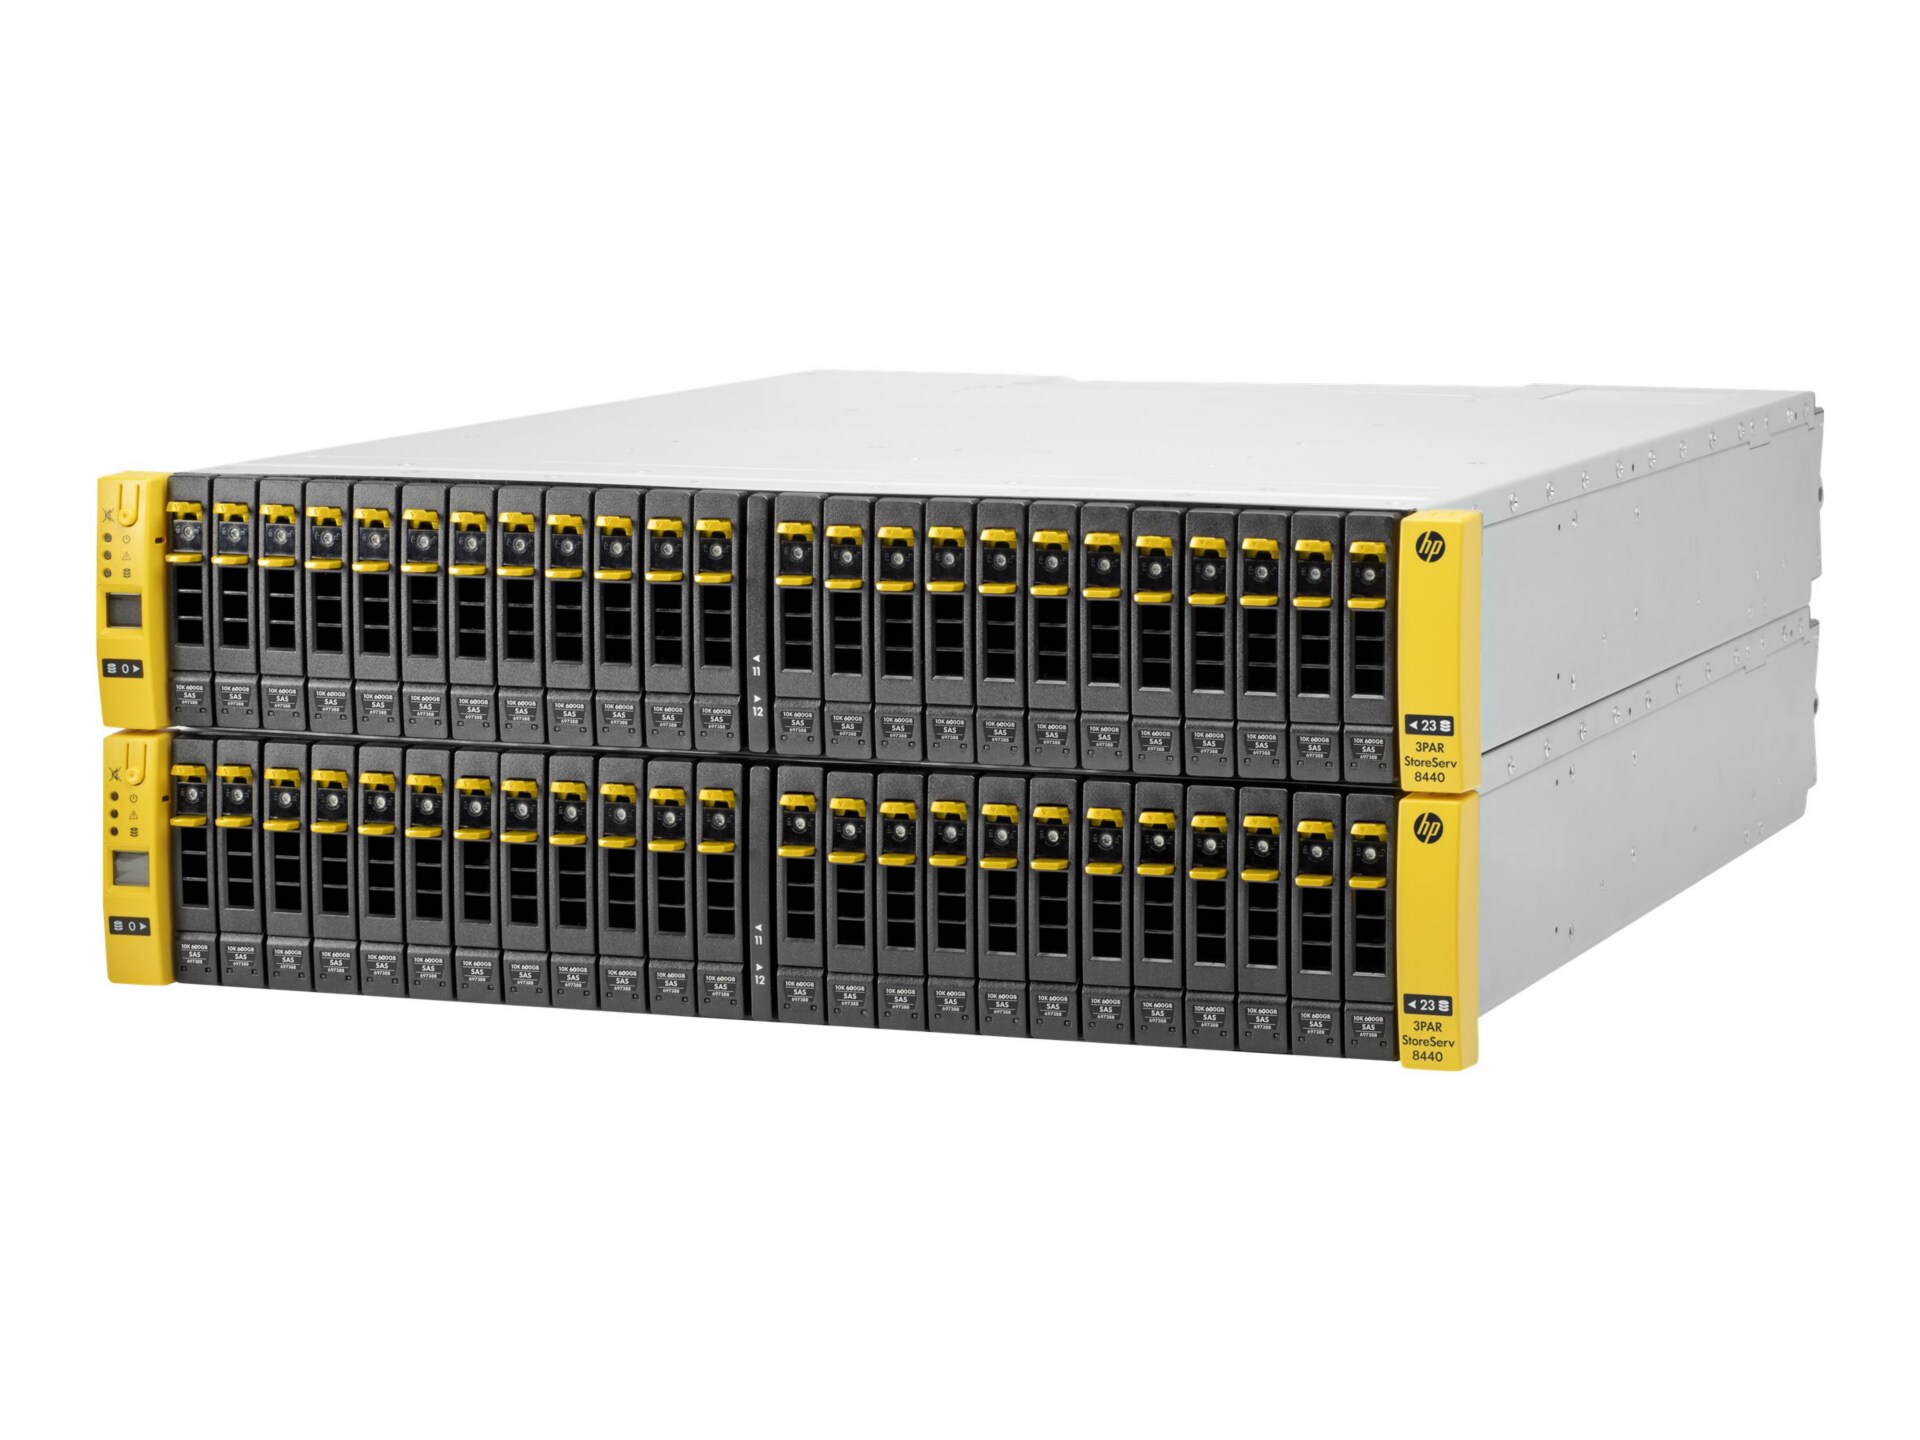 HPE 3PAR StoreServ 8440 4-node Storage Base for Storage Centric Rack - hard drive array